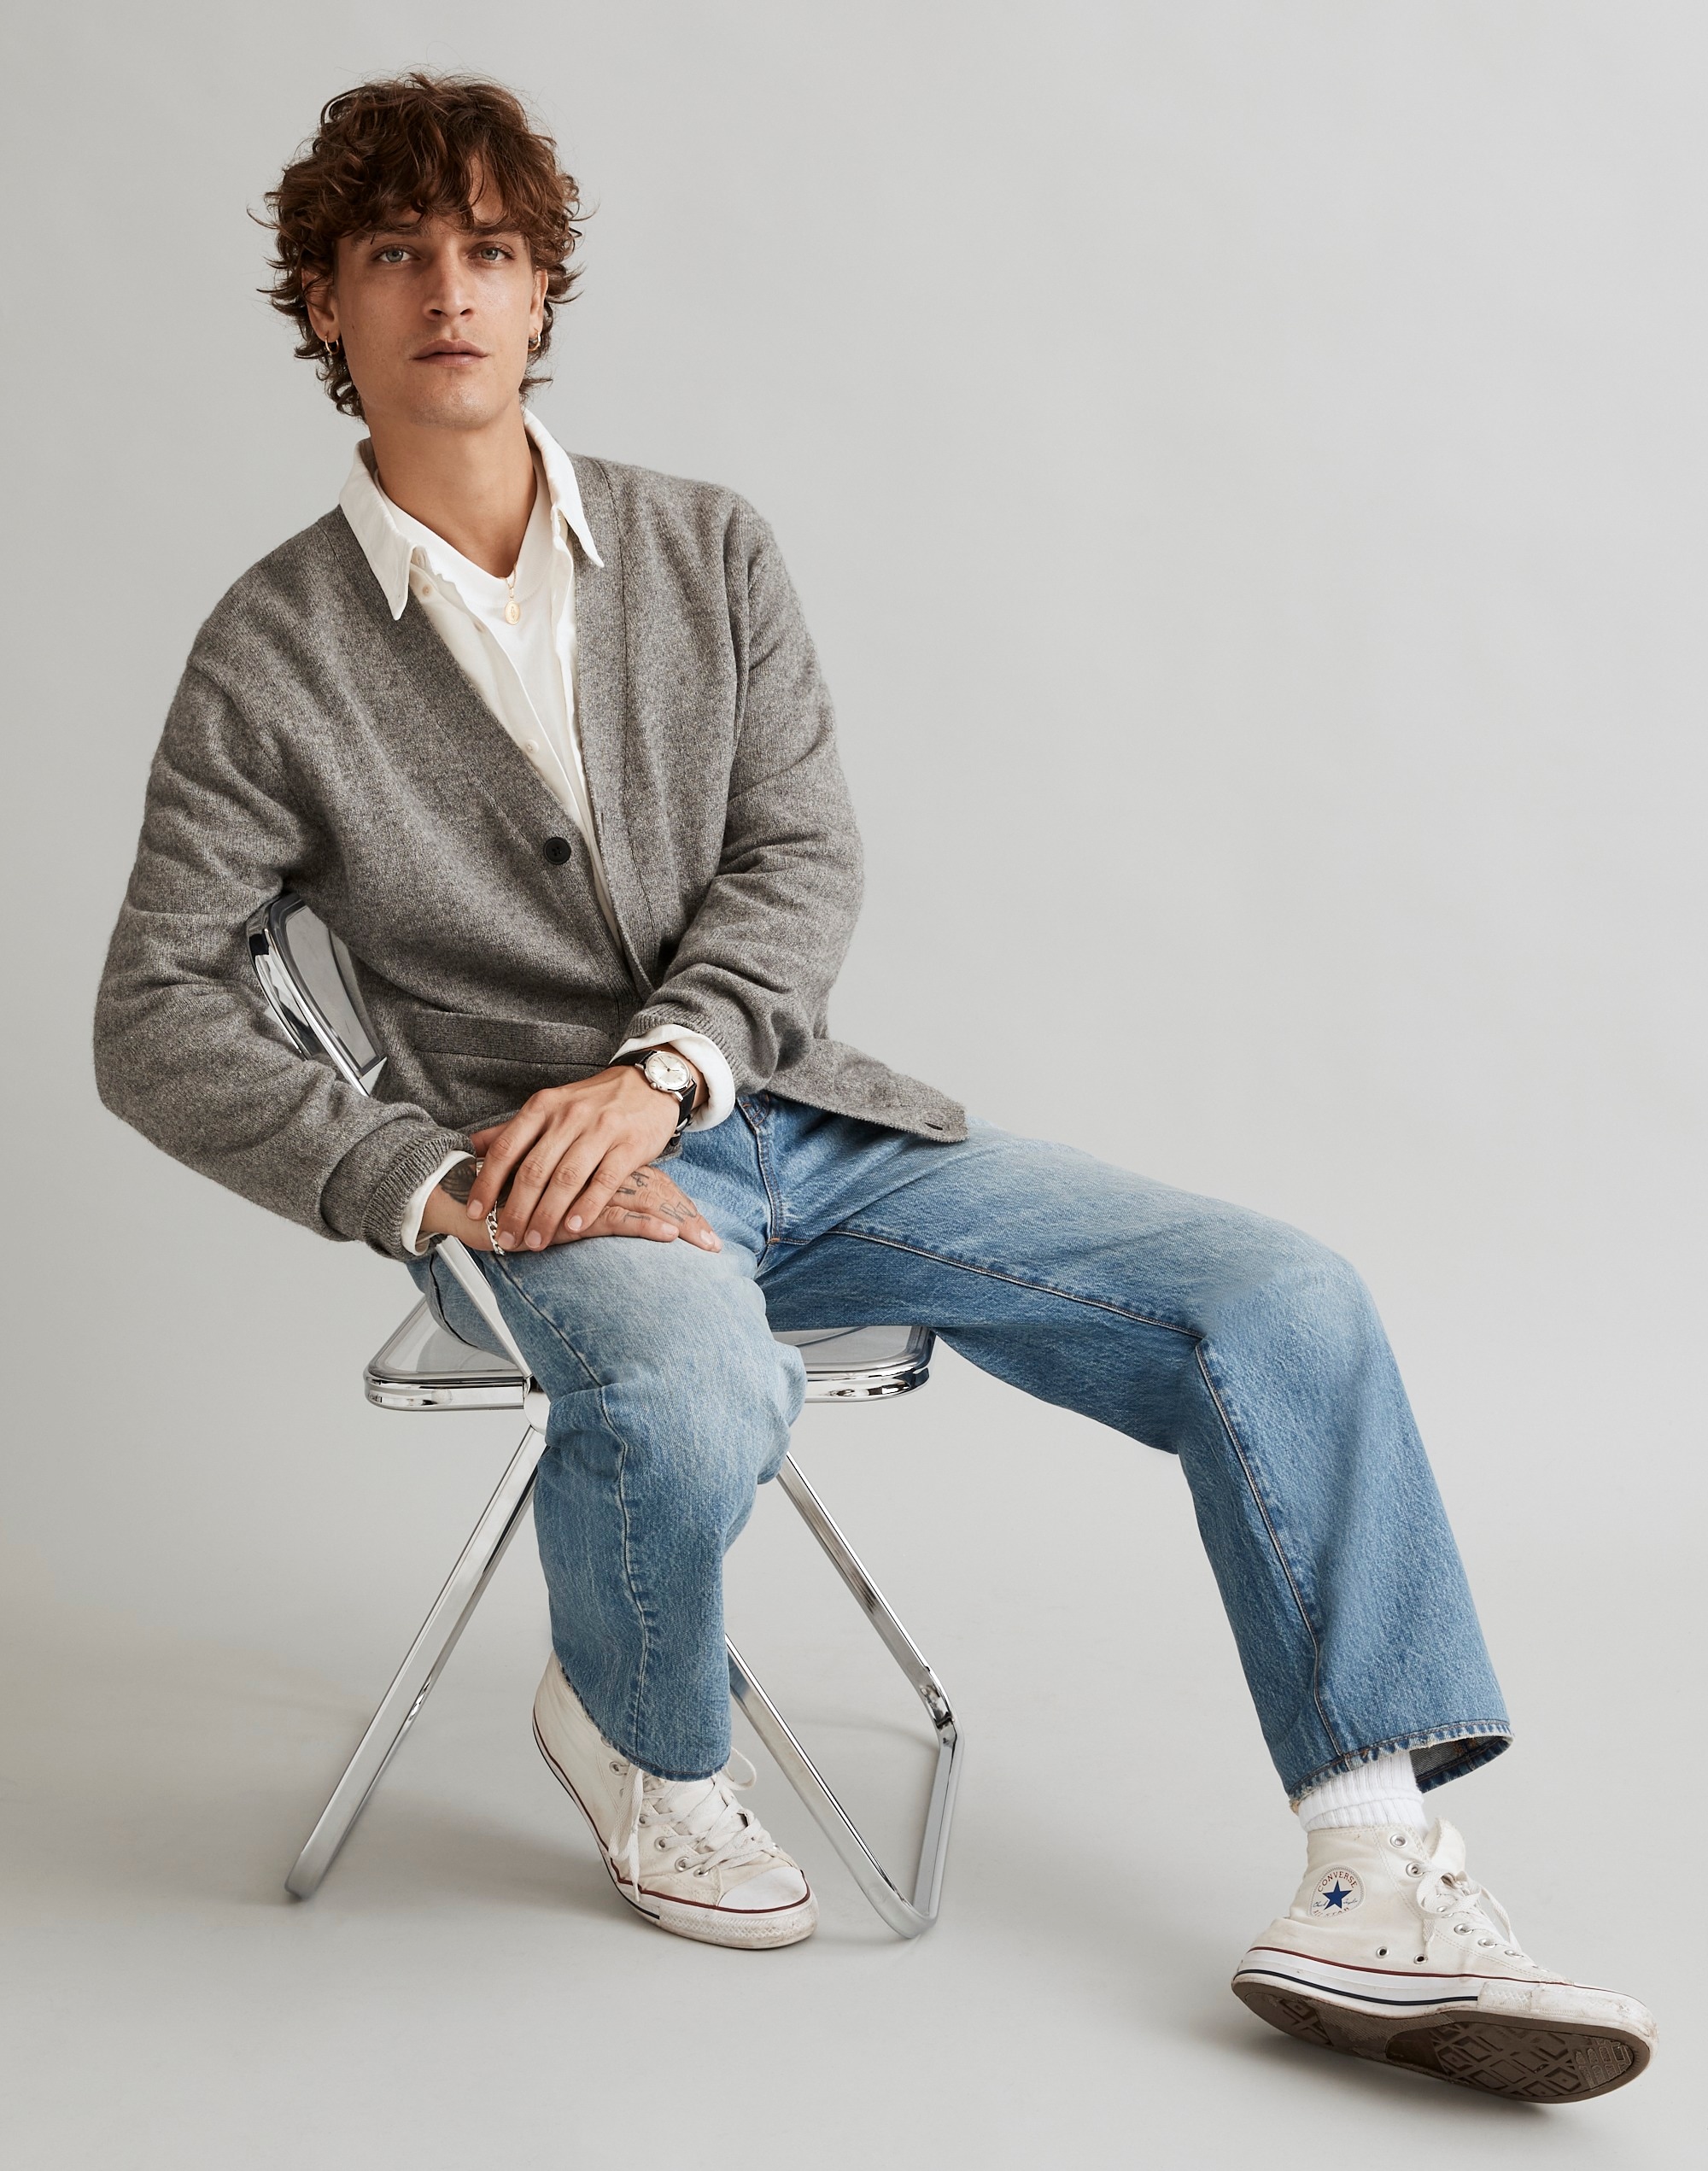 Cotton-Merino Wool Blend Cardigan Sweater